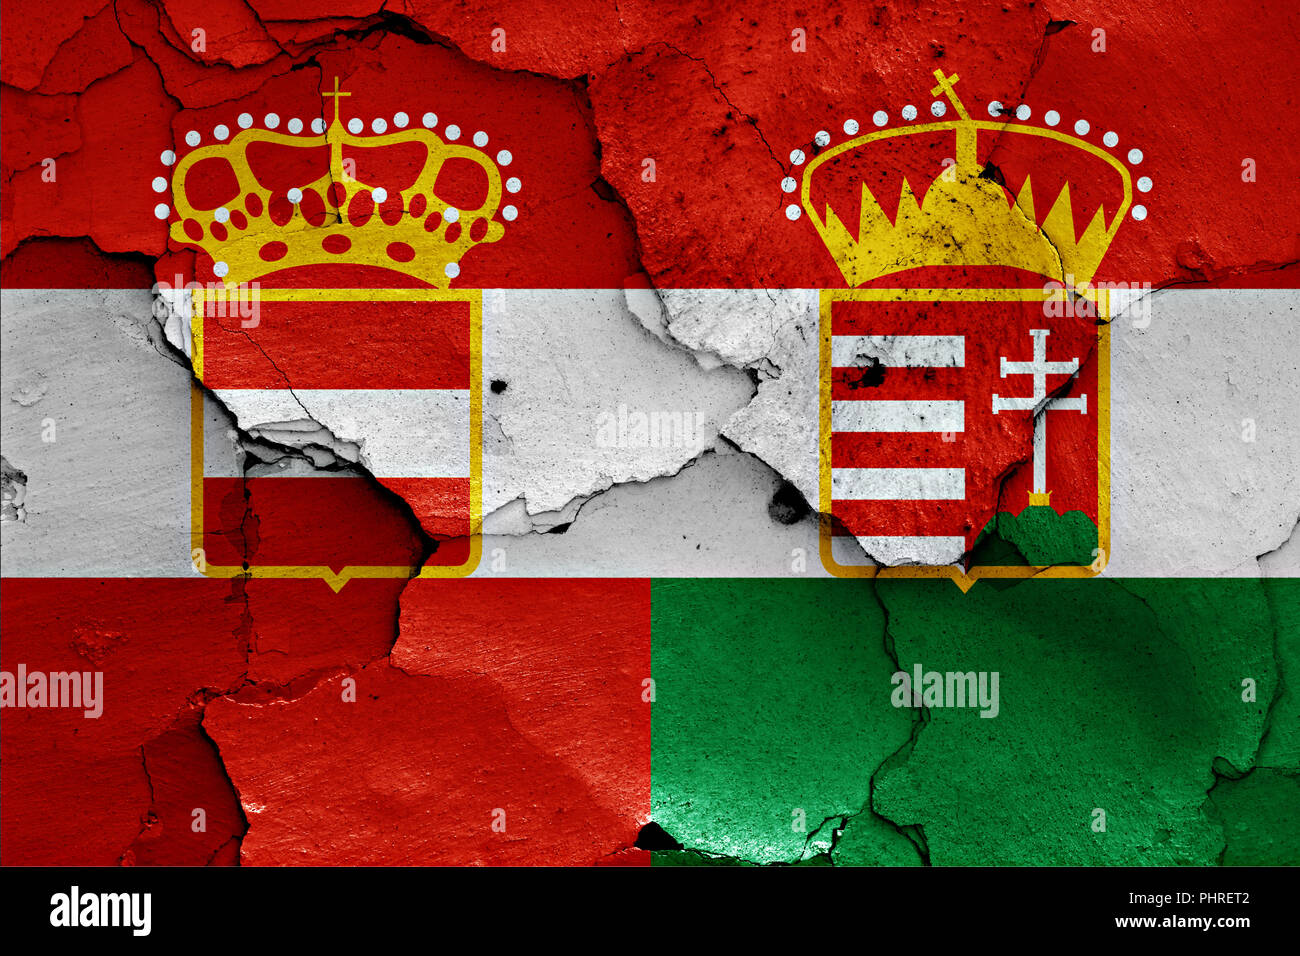 Austria Flag Background Stock Illustration - Download Image Now